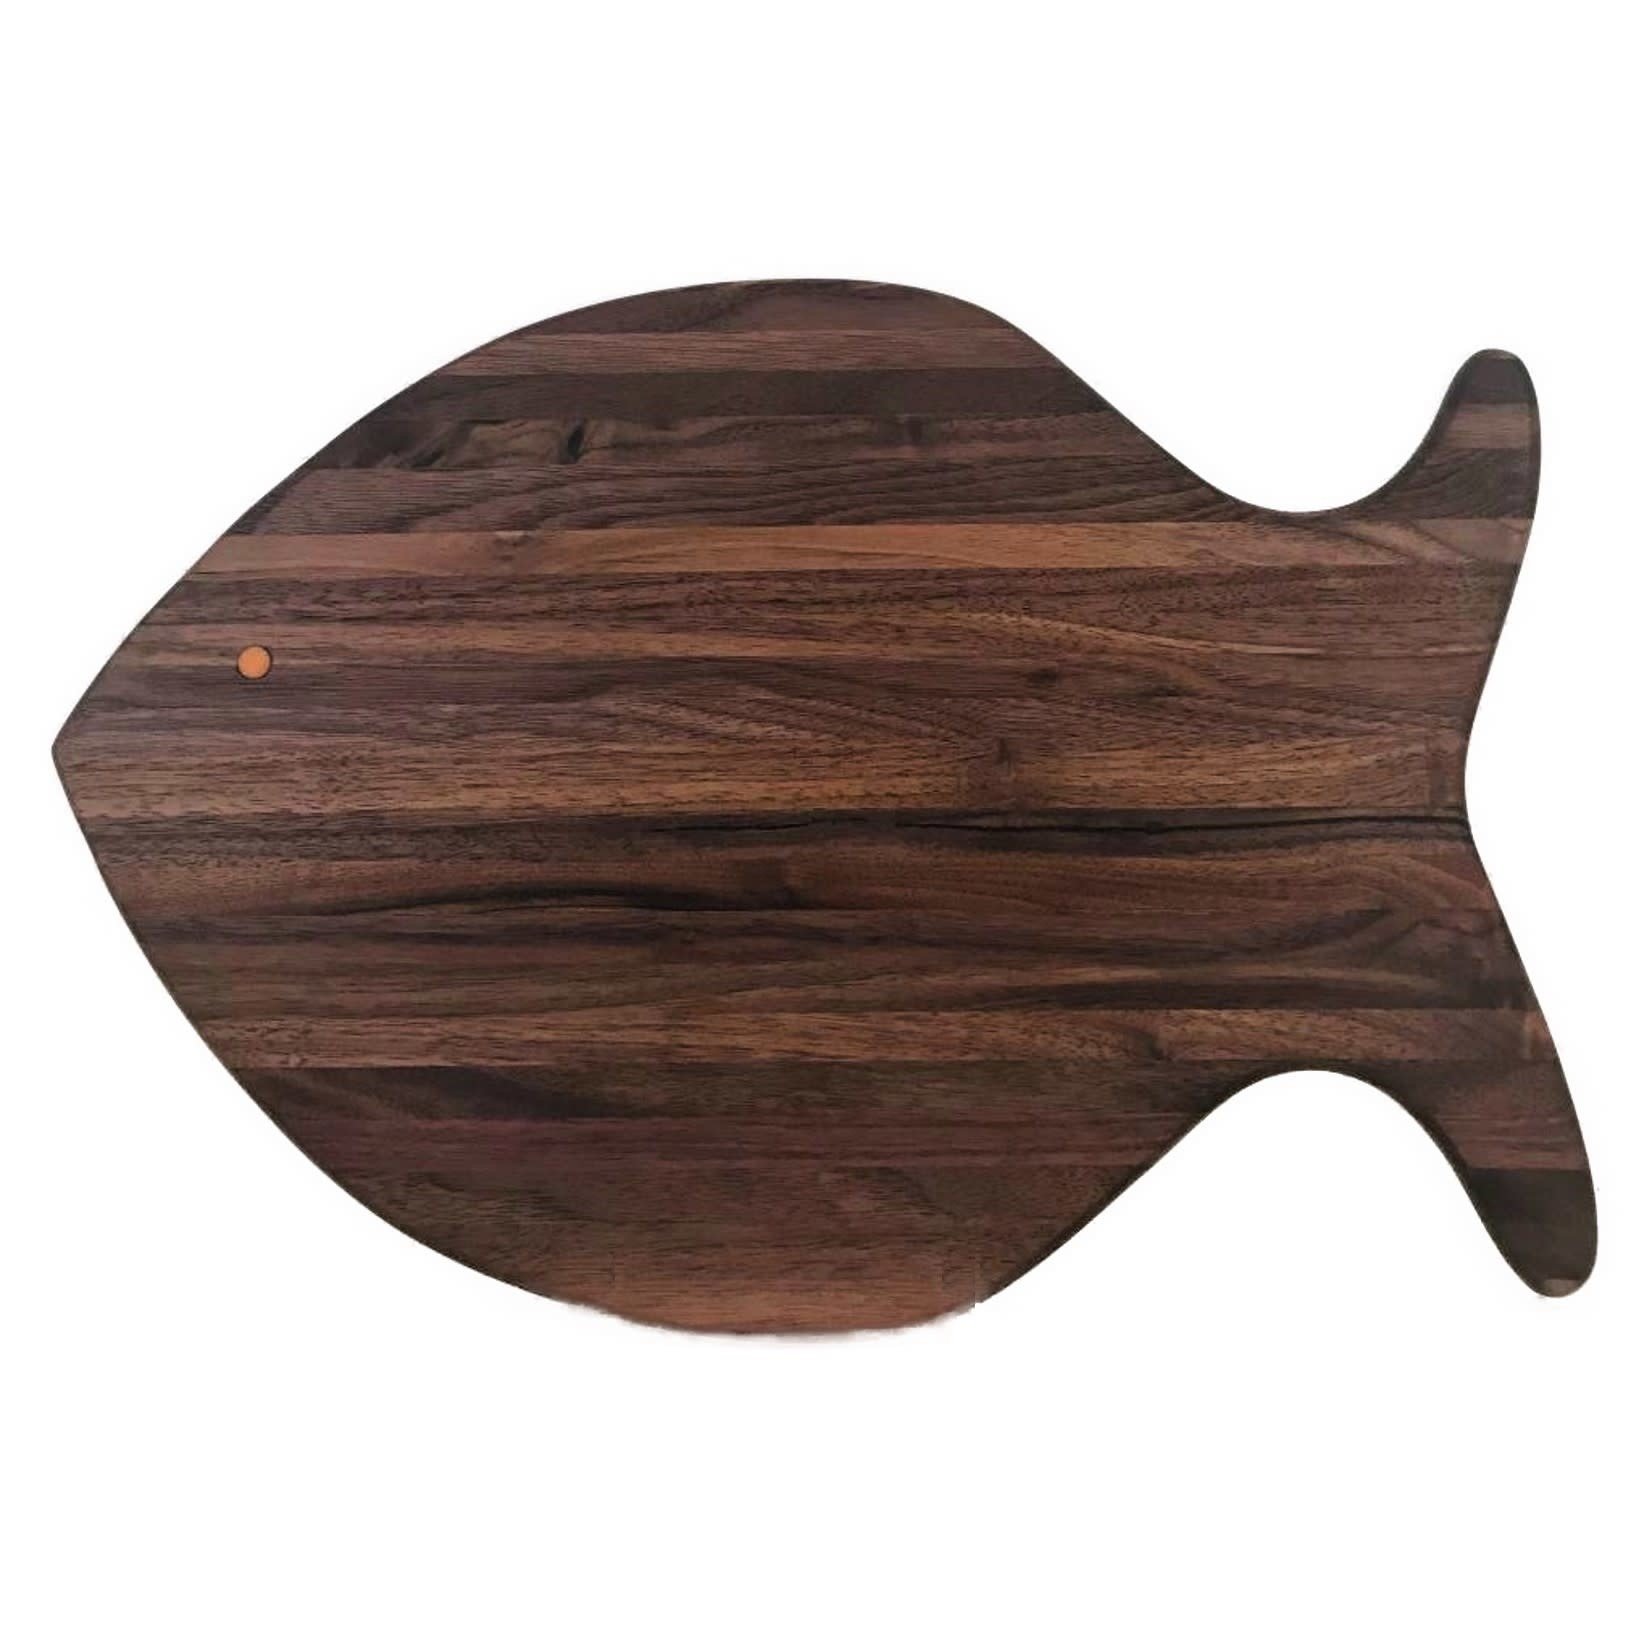 Fish shaped Cutting Board